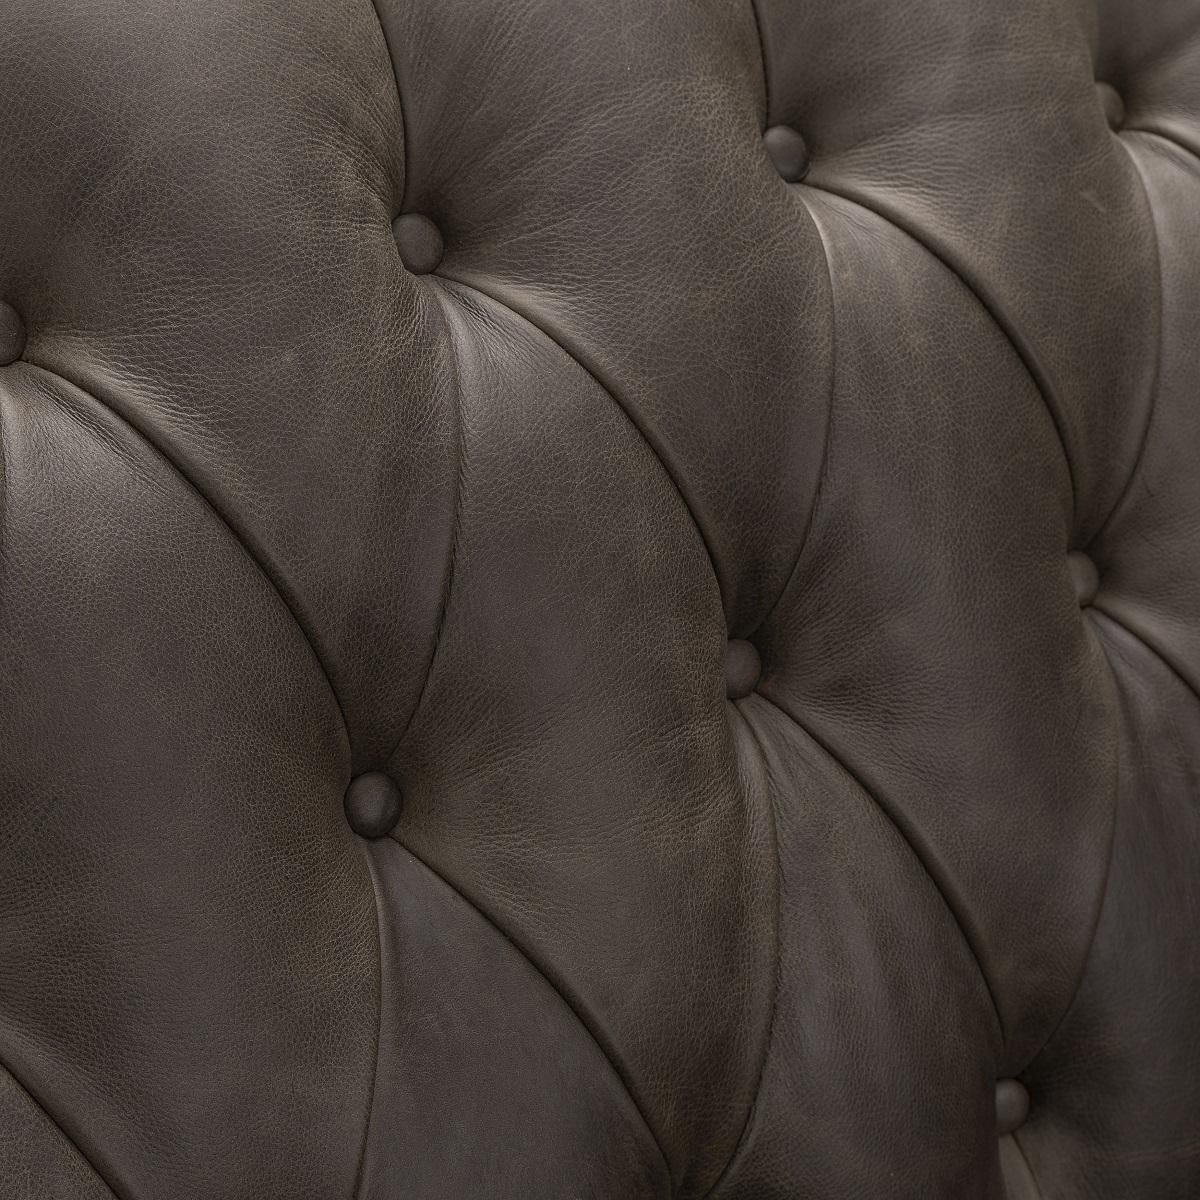 Pulaski Charlie Leather Chair in Heritage Brown - Luxury Home Furniture (MI)